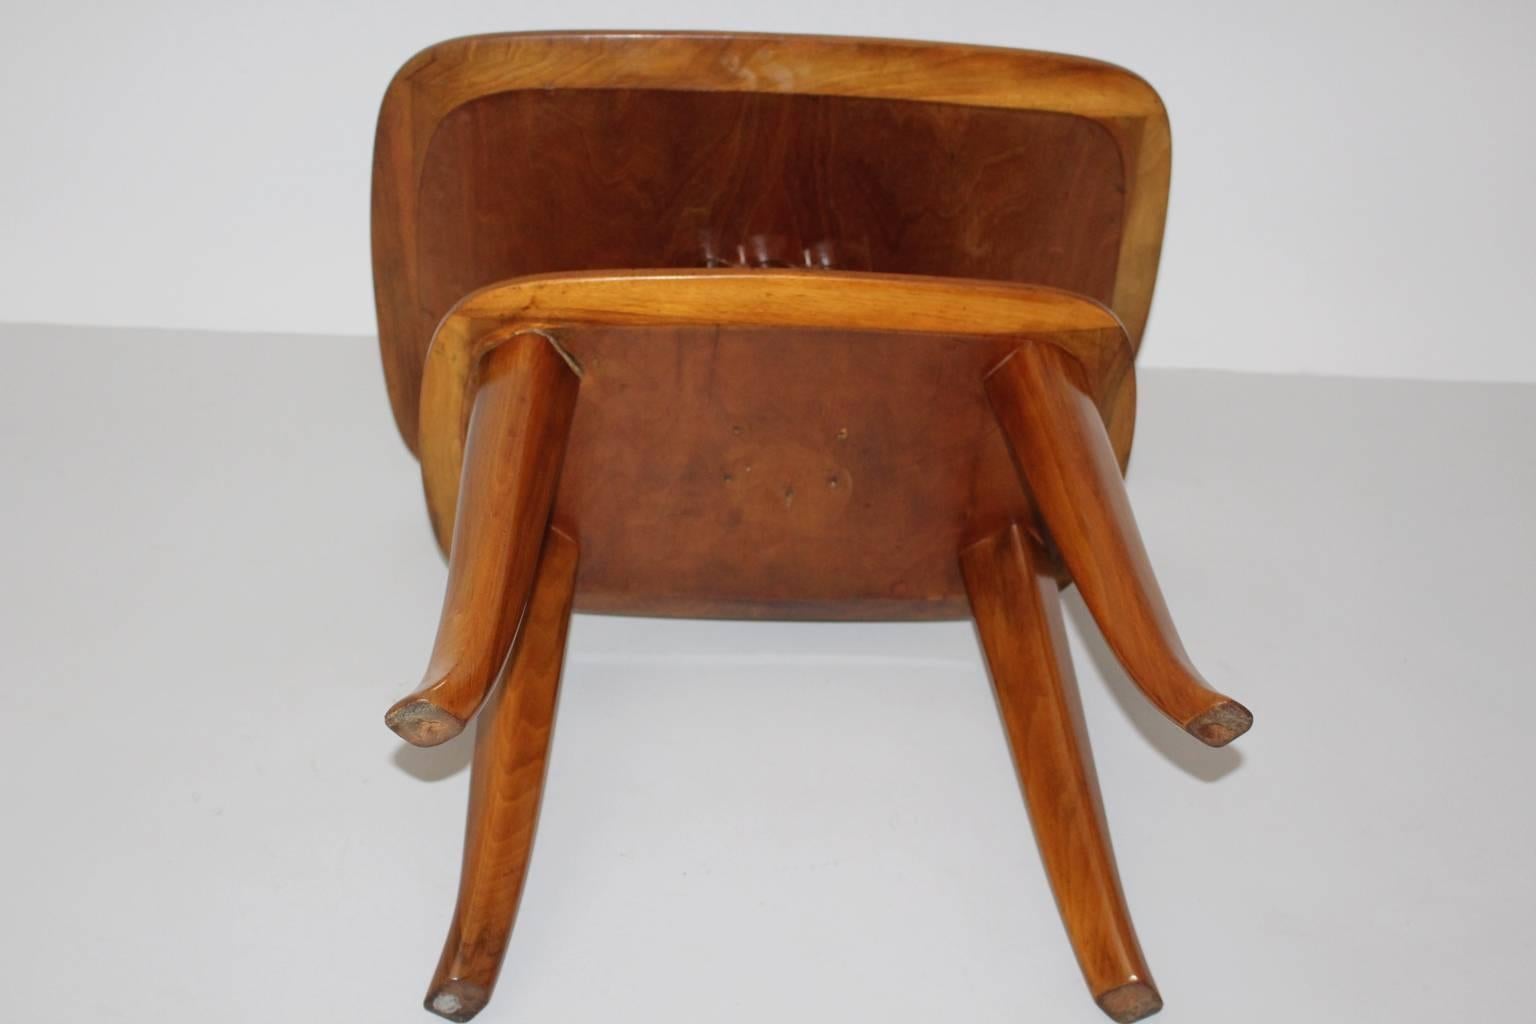 Early 20th Century Art Deco Vintage Walnut Side Table Coffee Table Style Josef Frank c 1925 Austria